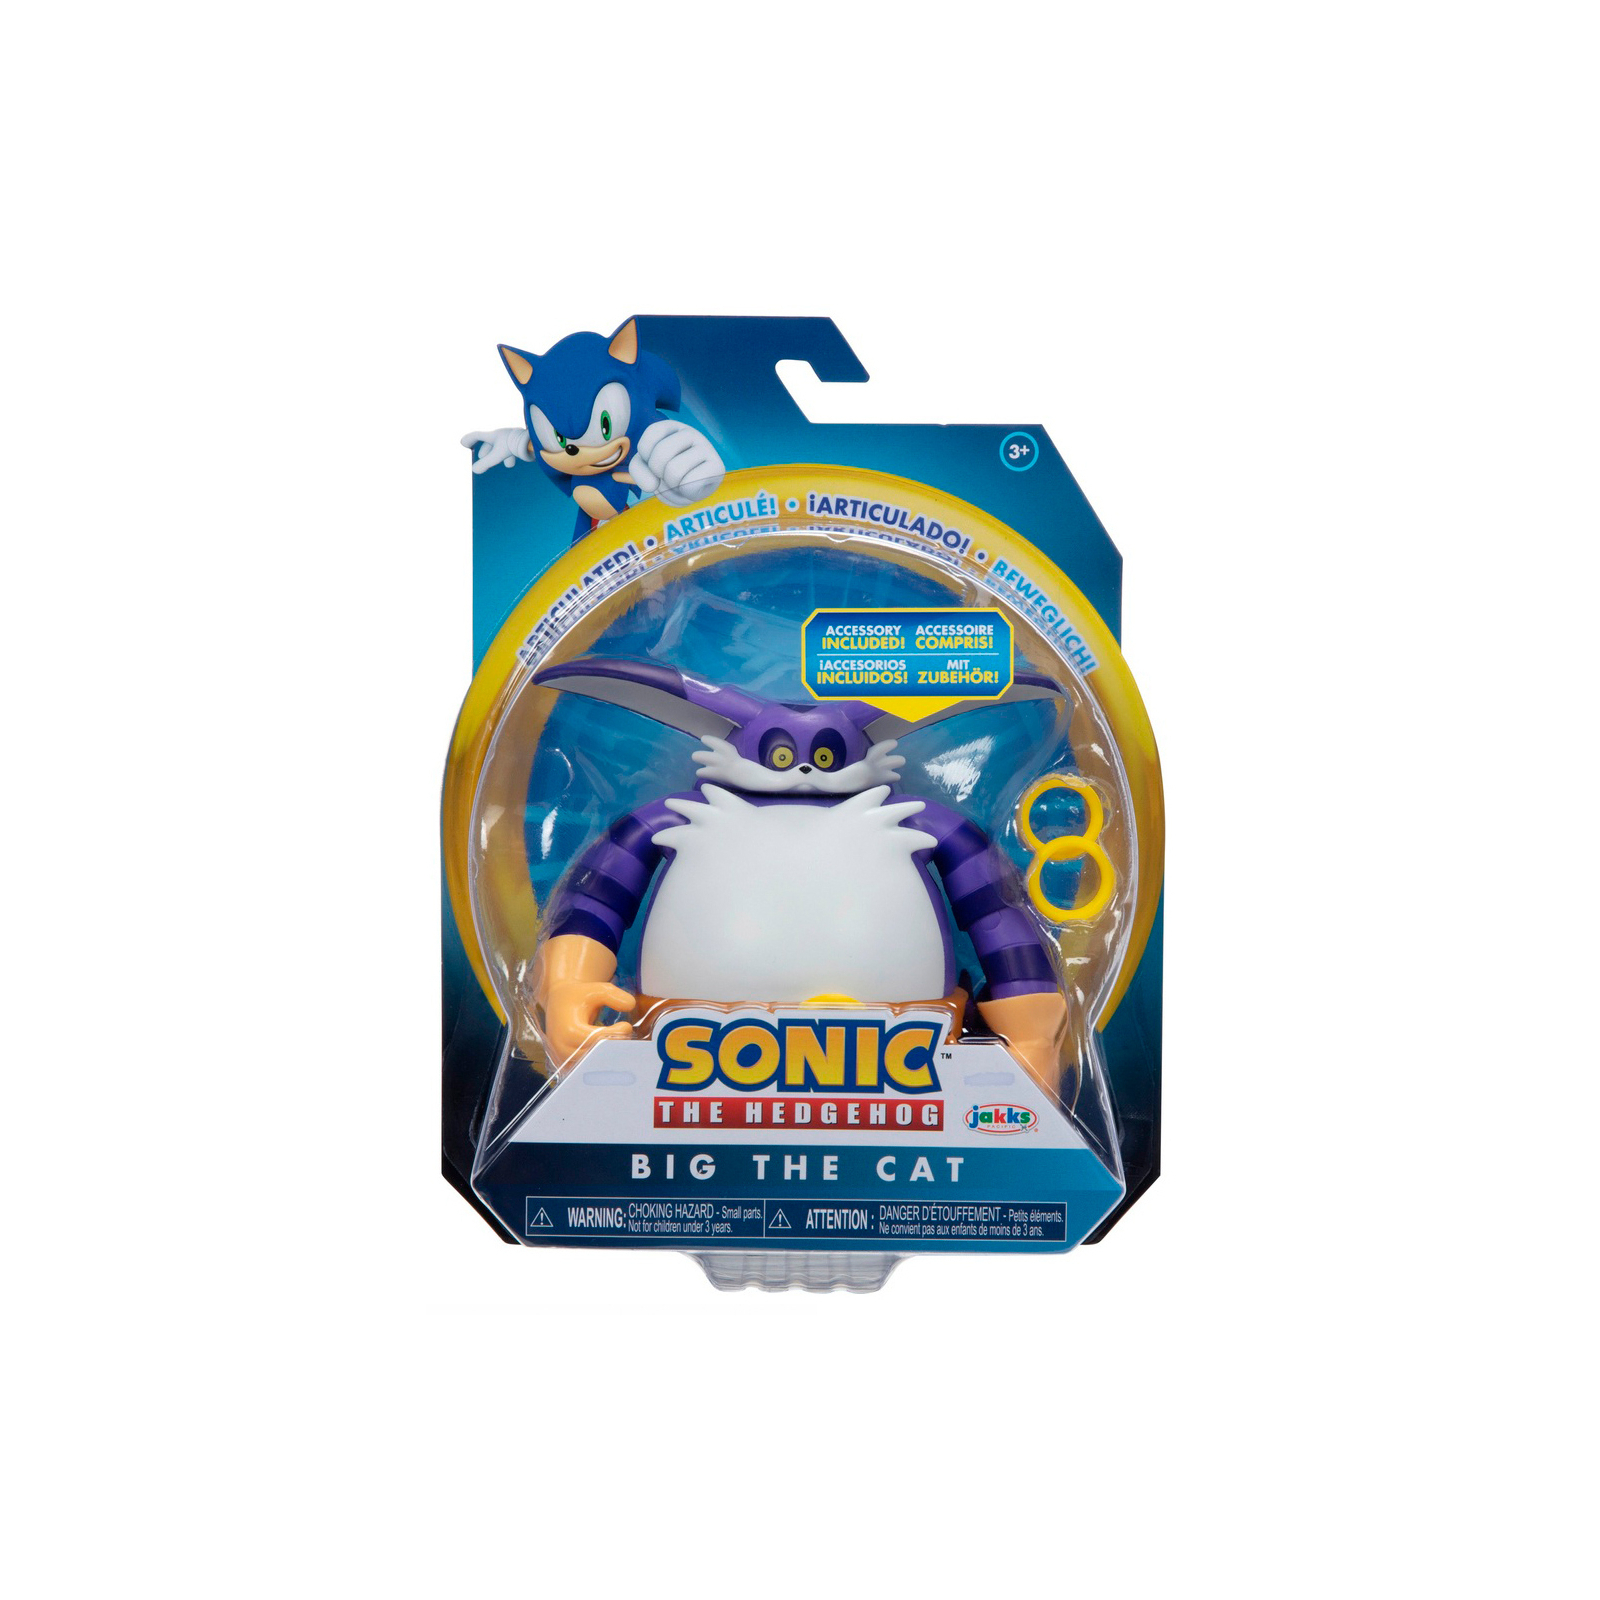 Фигурка Sonic the Hedgehog с артикуляцией - Модерн Кот Биг 10 см (41680i-GEN) изображение 5